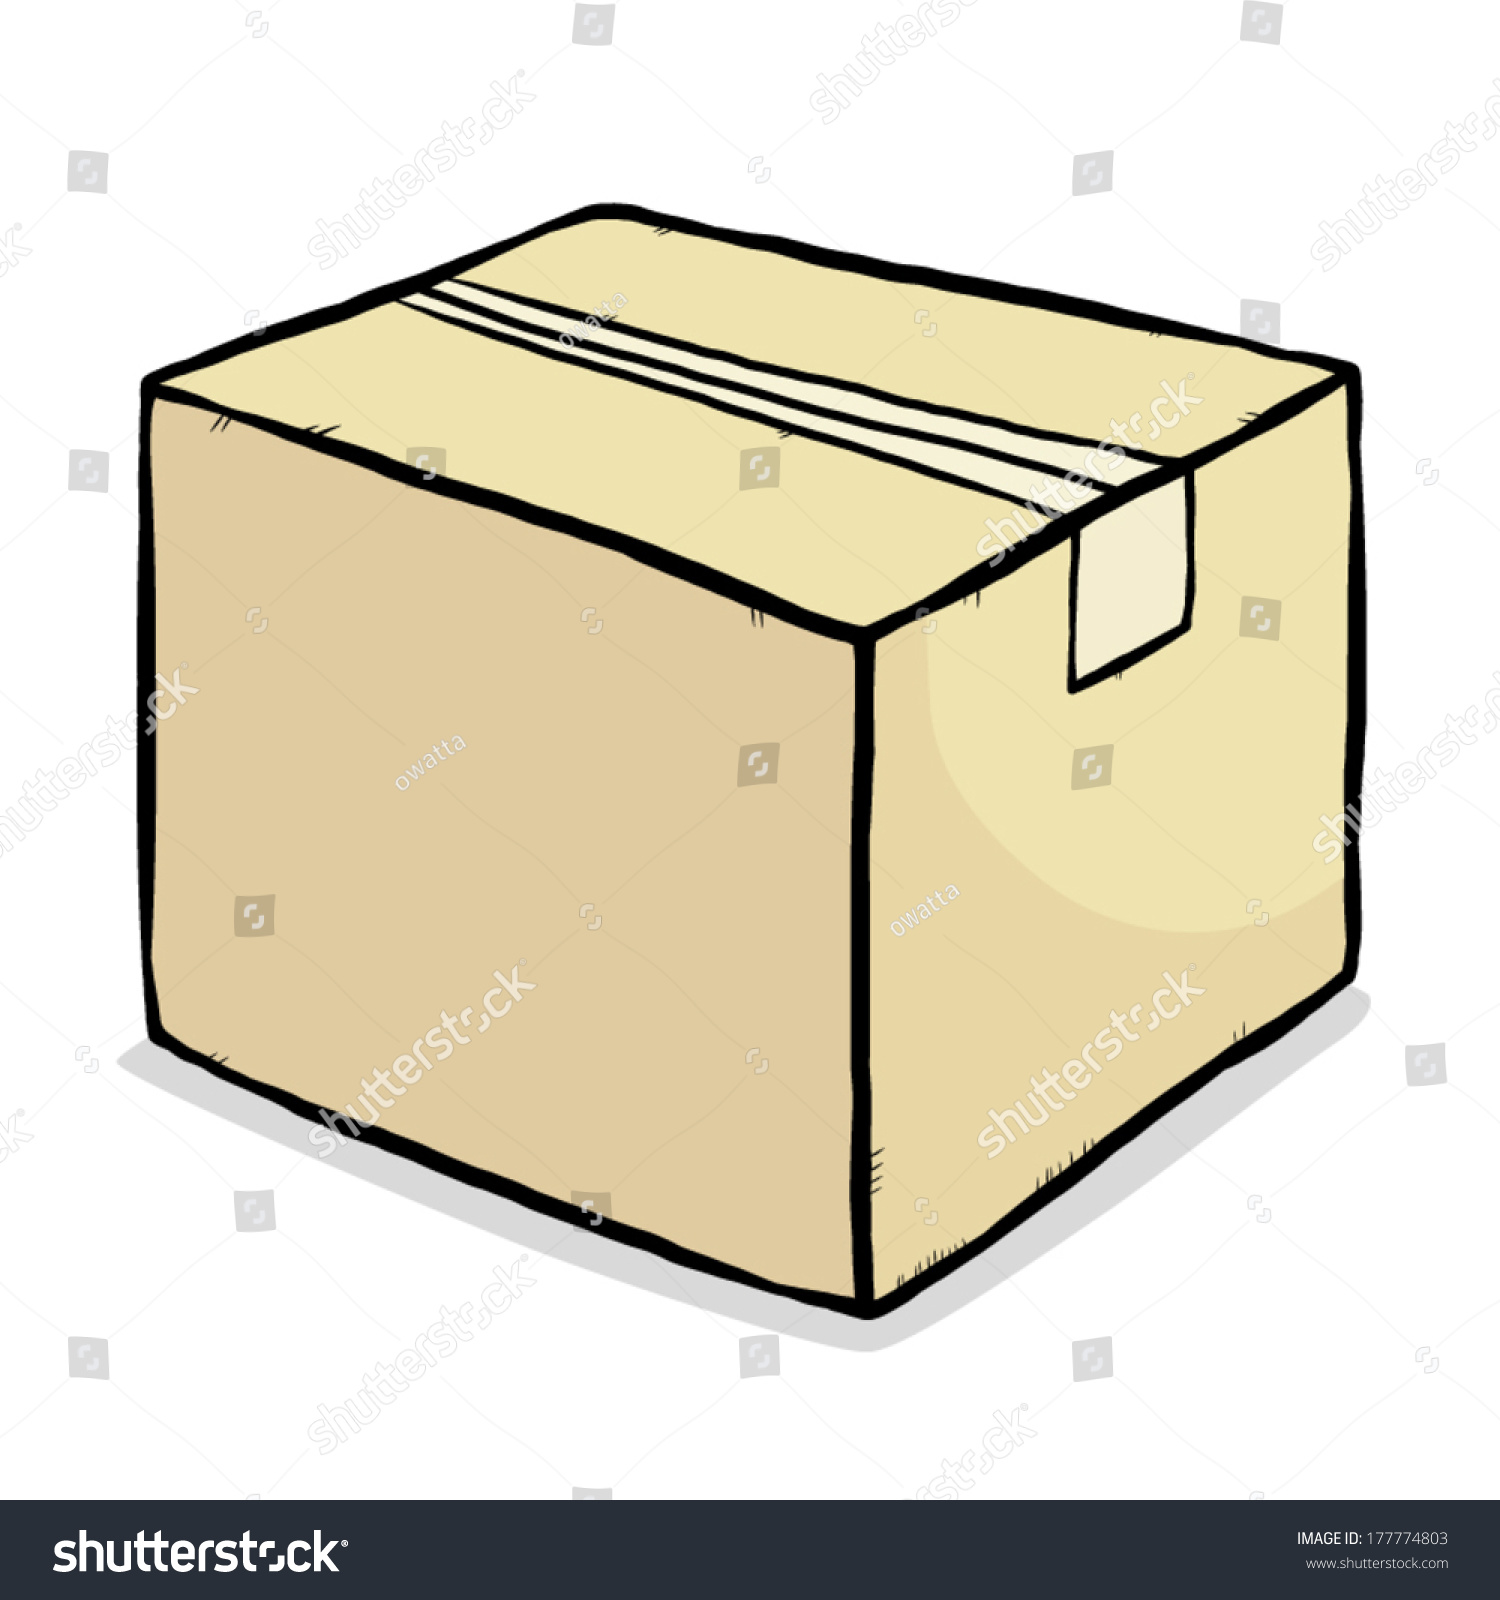 Closed Cardboard Paper Box / Cartoon Vector And Illustration, Hand